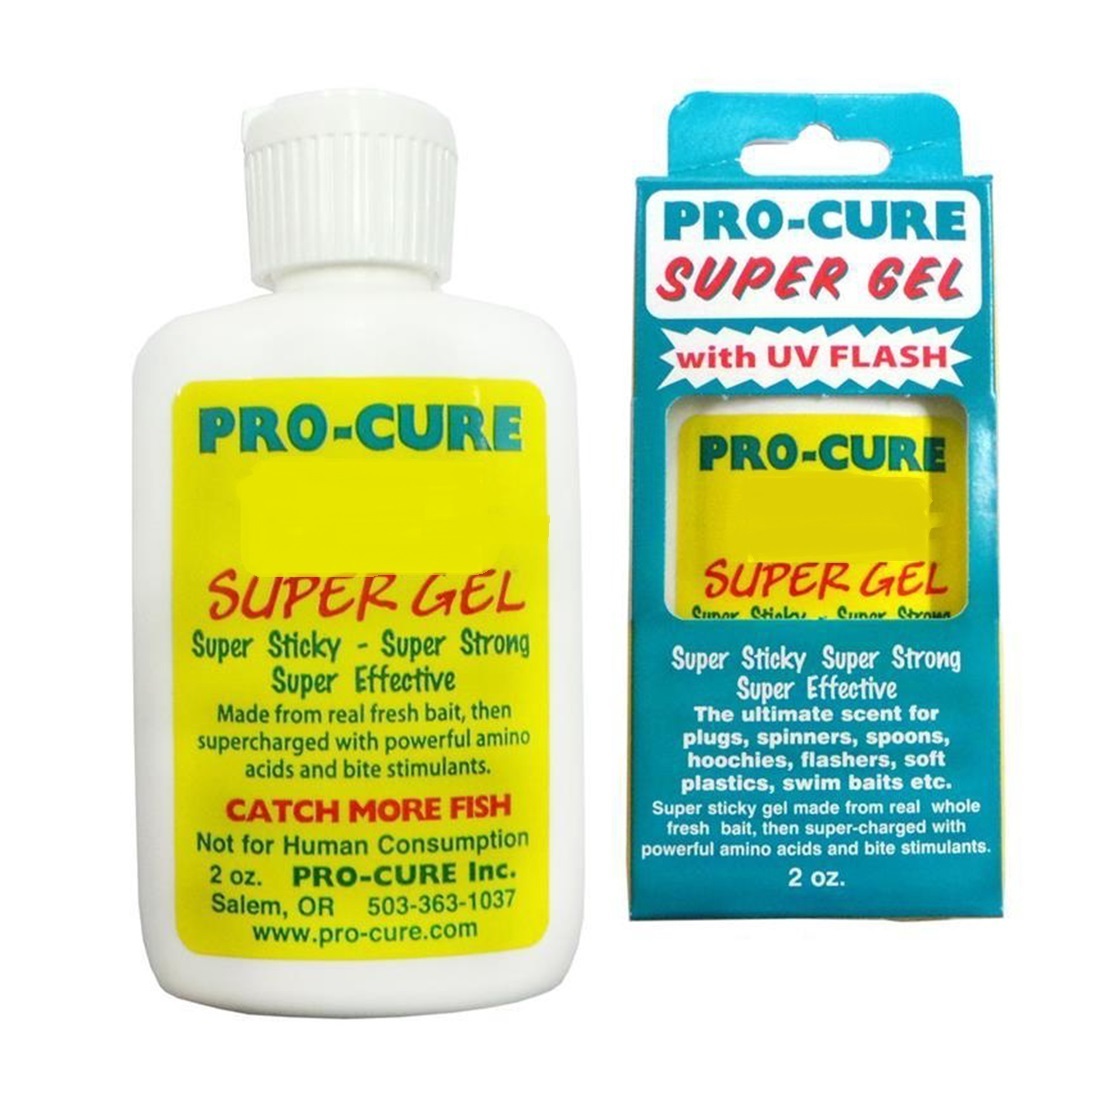 Pro-Cure Super Gel Scent With UV Flash - 2 oz Bottle [Scent